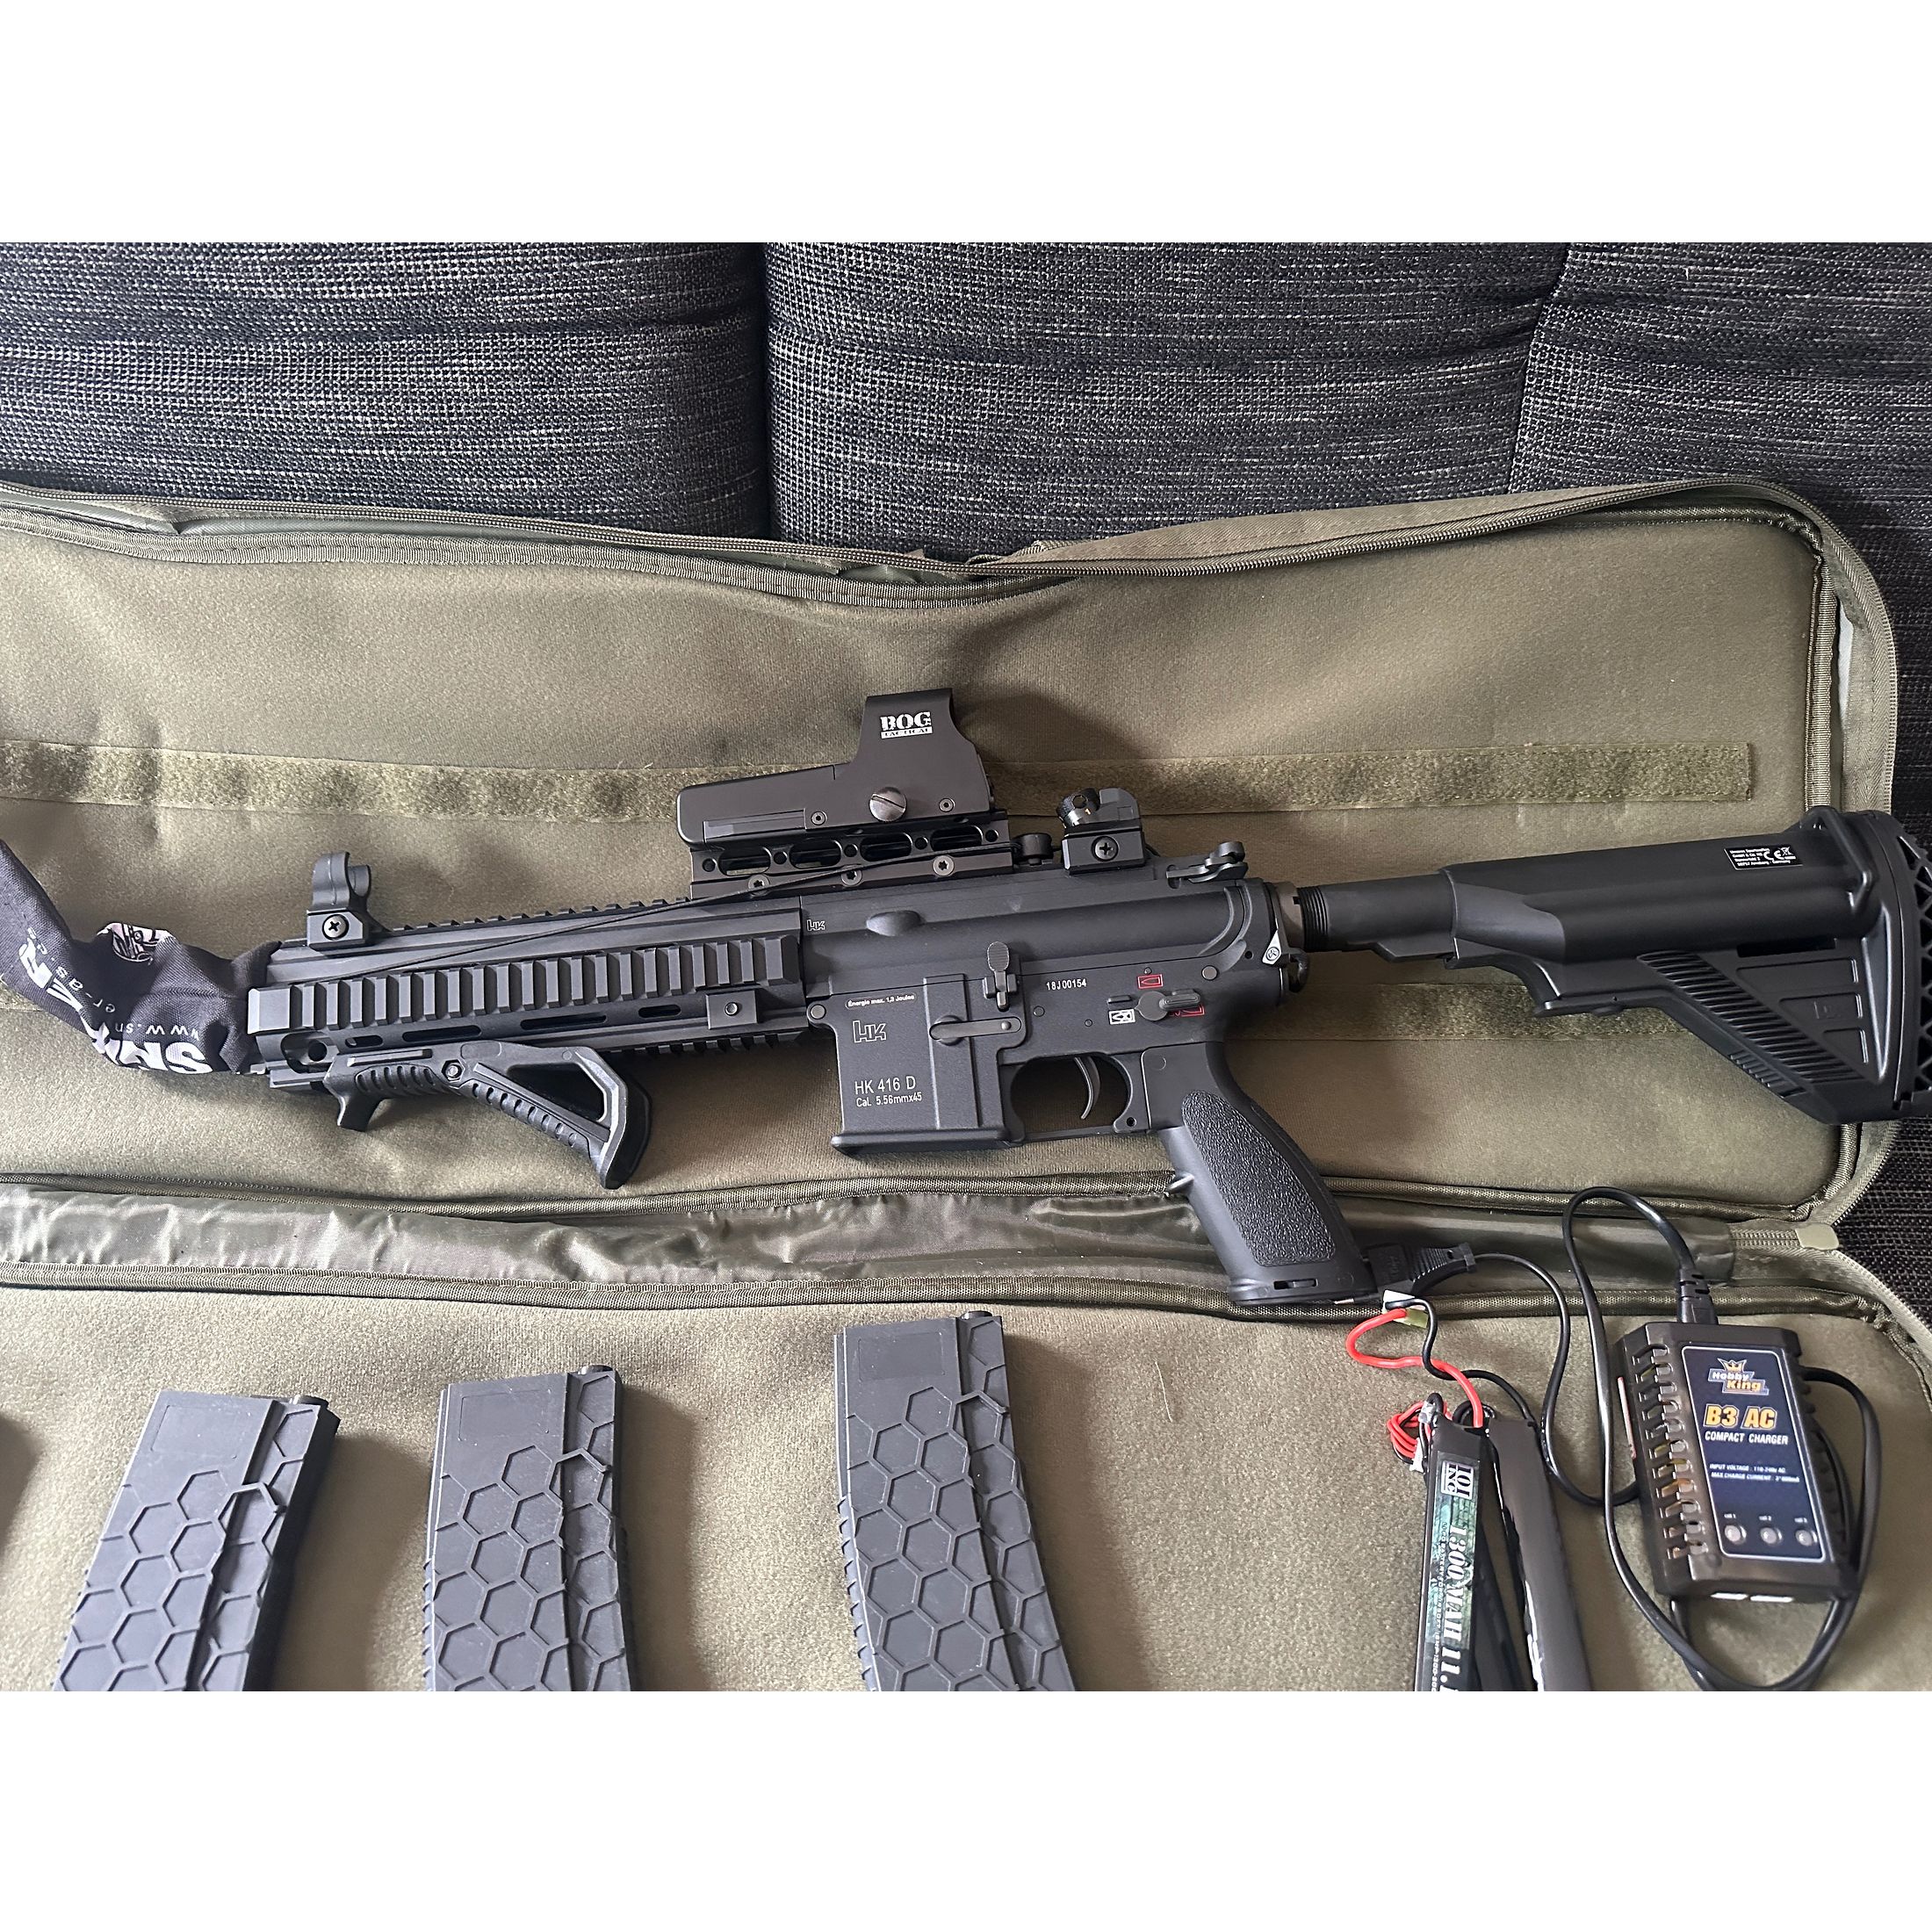 Umarex HK 416D CQB S-AEG  Einsteigerset 1,3J